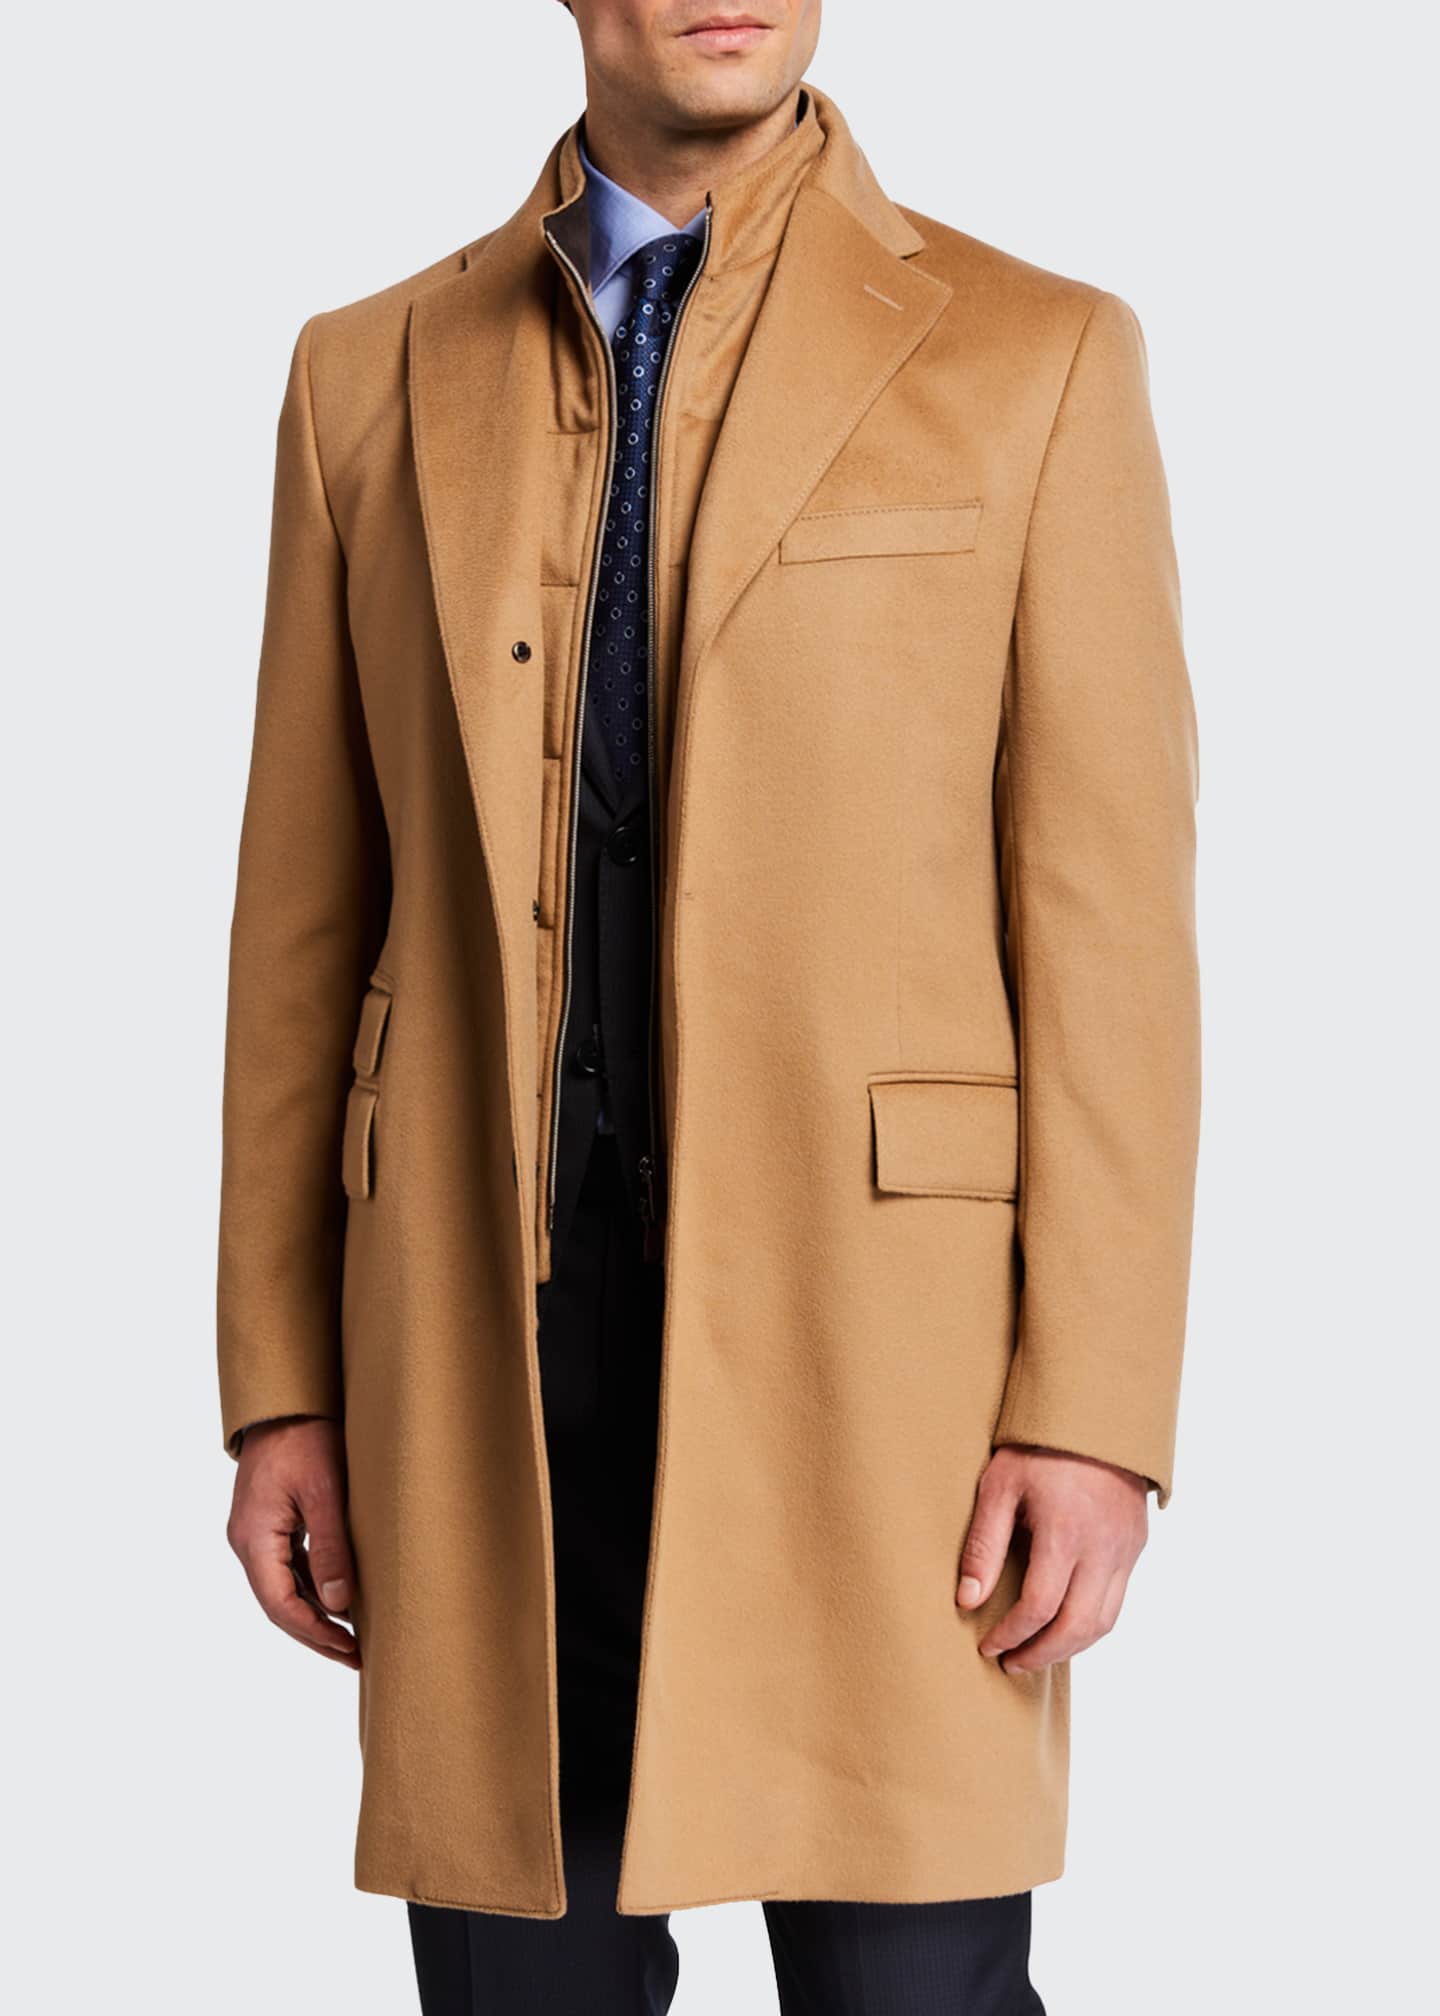 Corneliani Men's ID Top Coat w/ Removable Dickey - Bergdorf Goodman